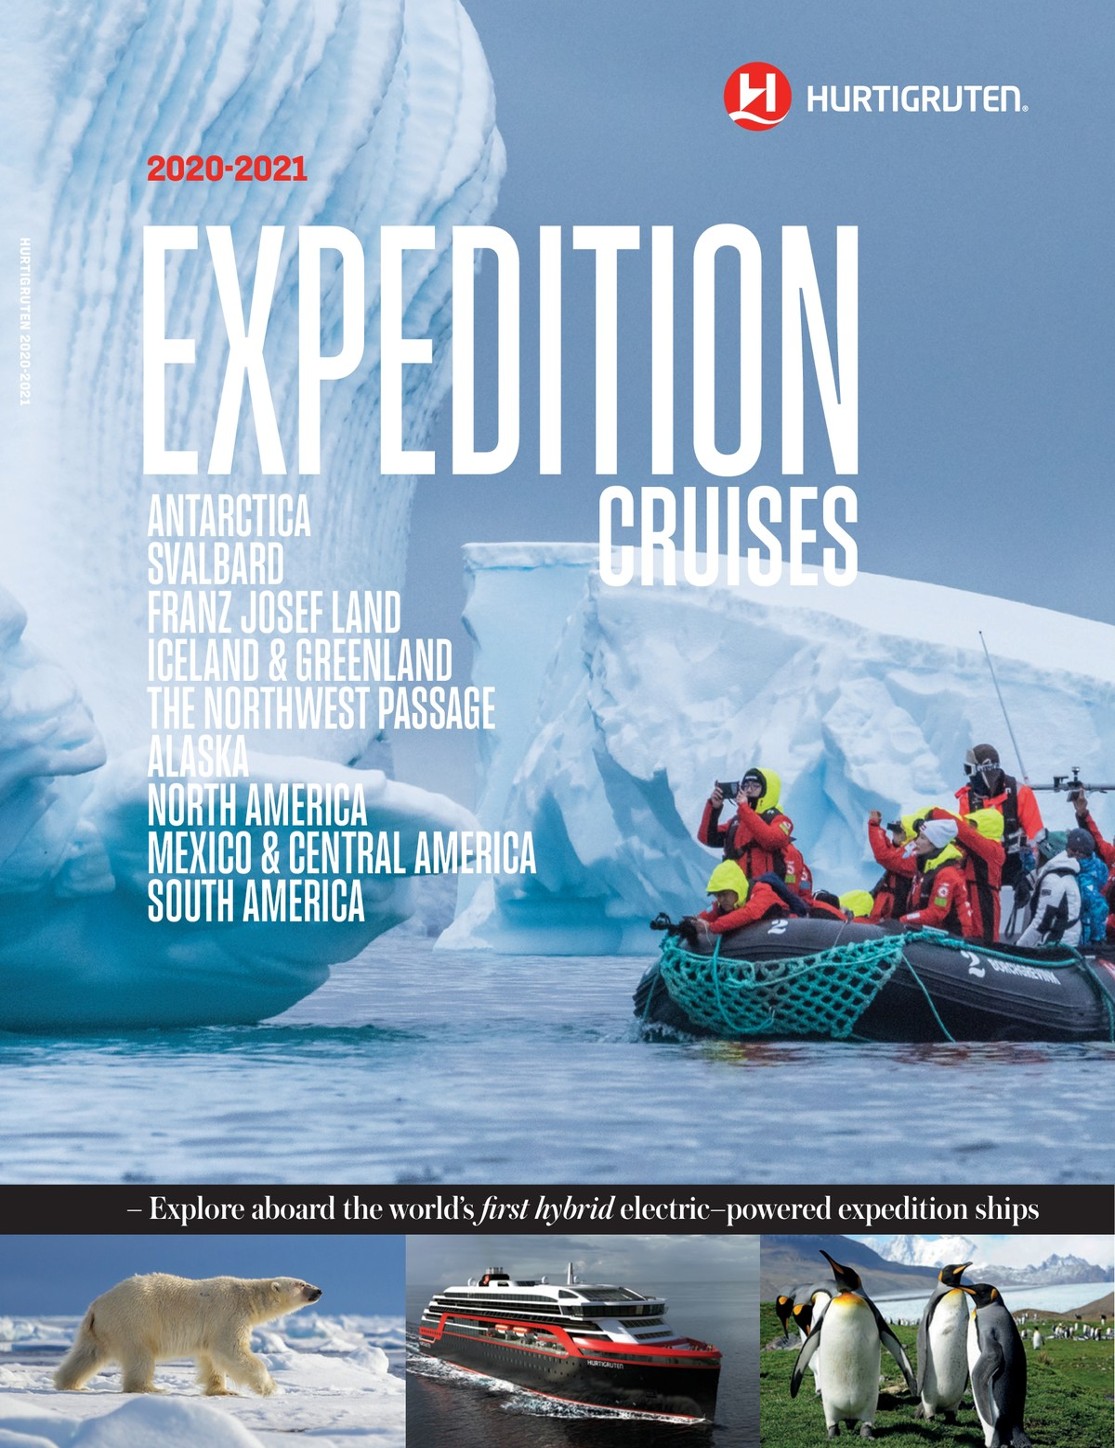 2020 2021 Expedition Cruise Full Brochure Hurtigruten [ 1448 x 1115 Pixel ]